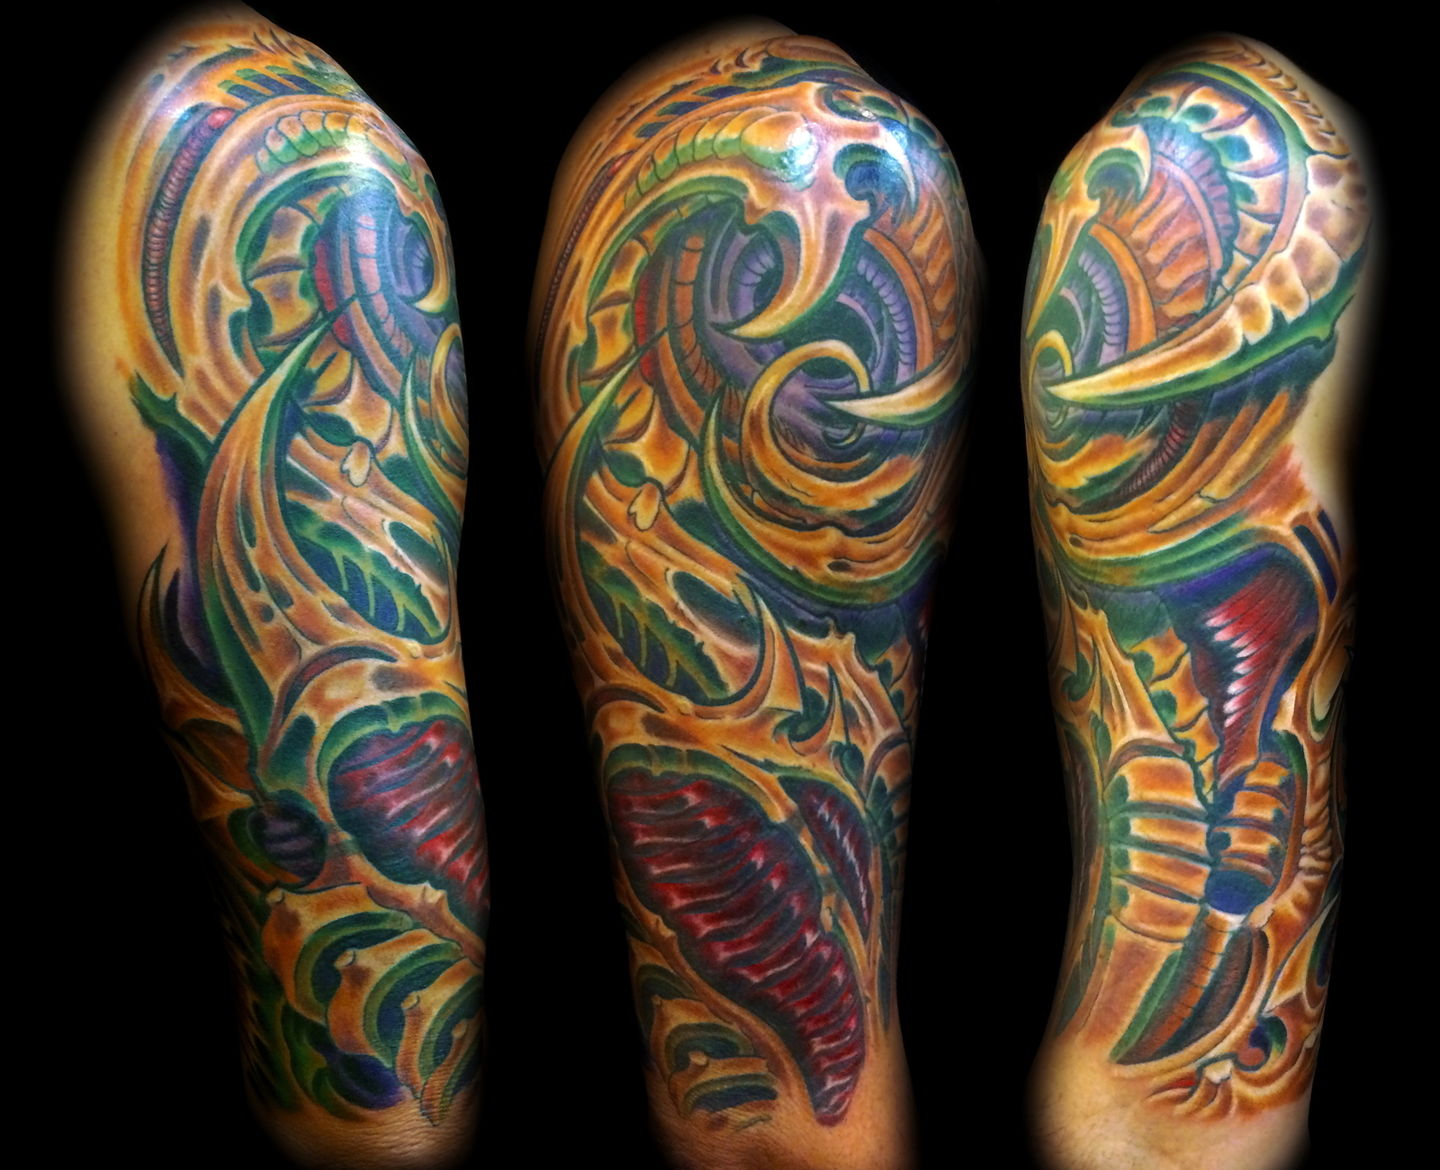 Las-vegas-tattoo-artist_joe-riley_biomech-sleeve-tattoos